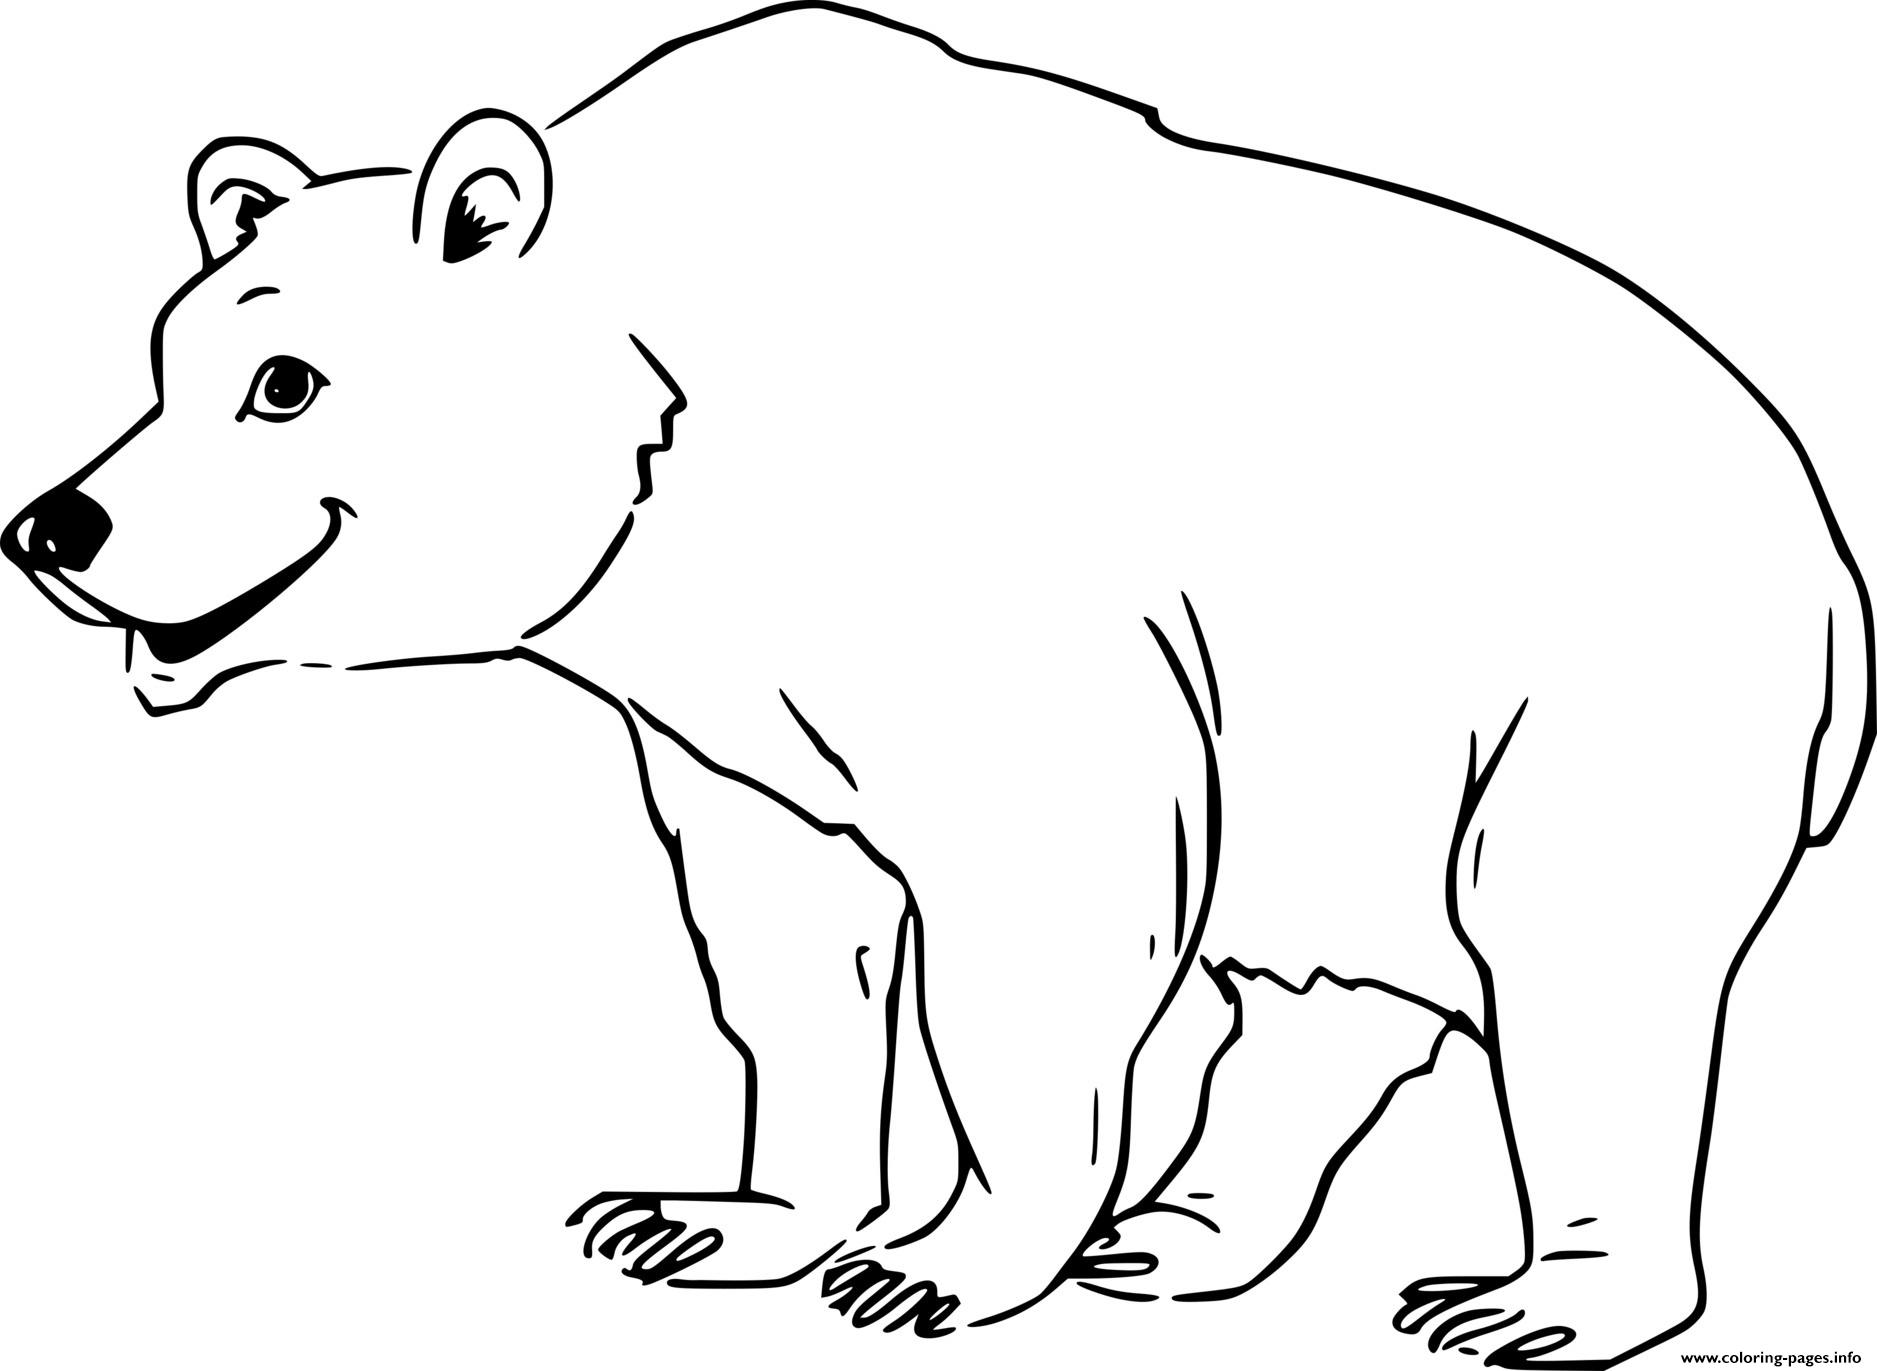 Распечатка медведя